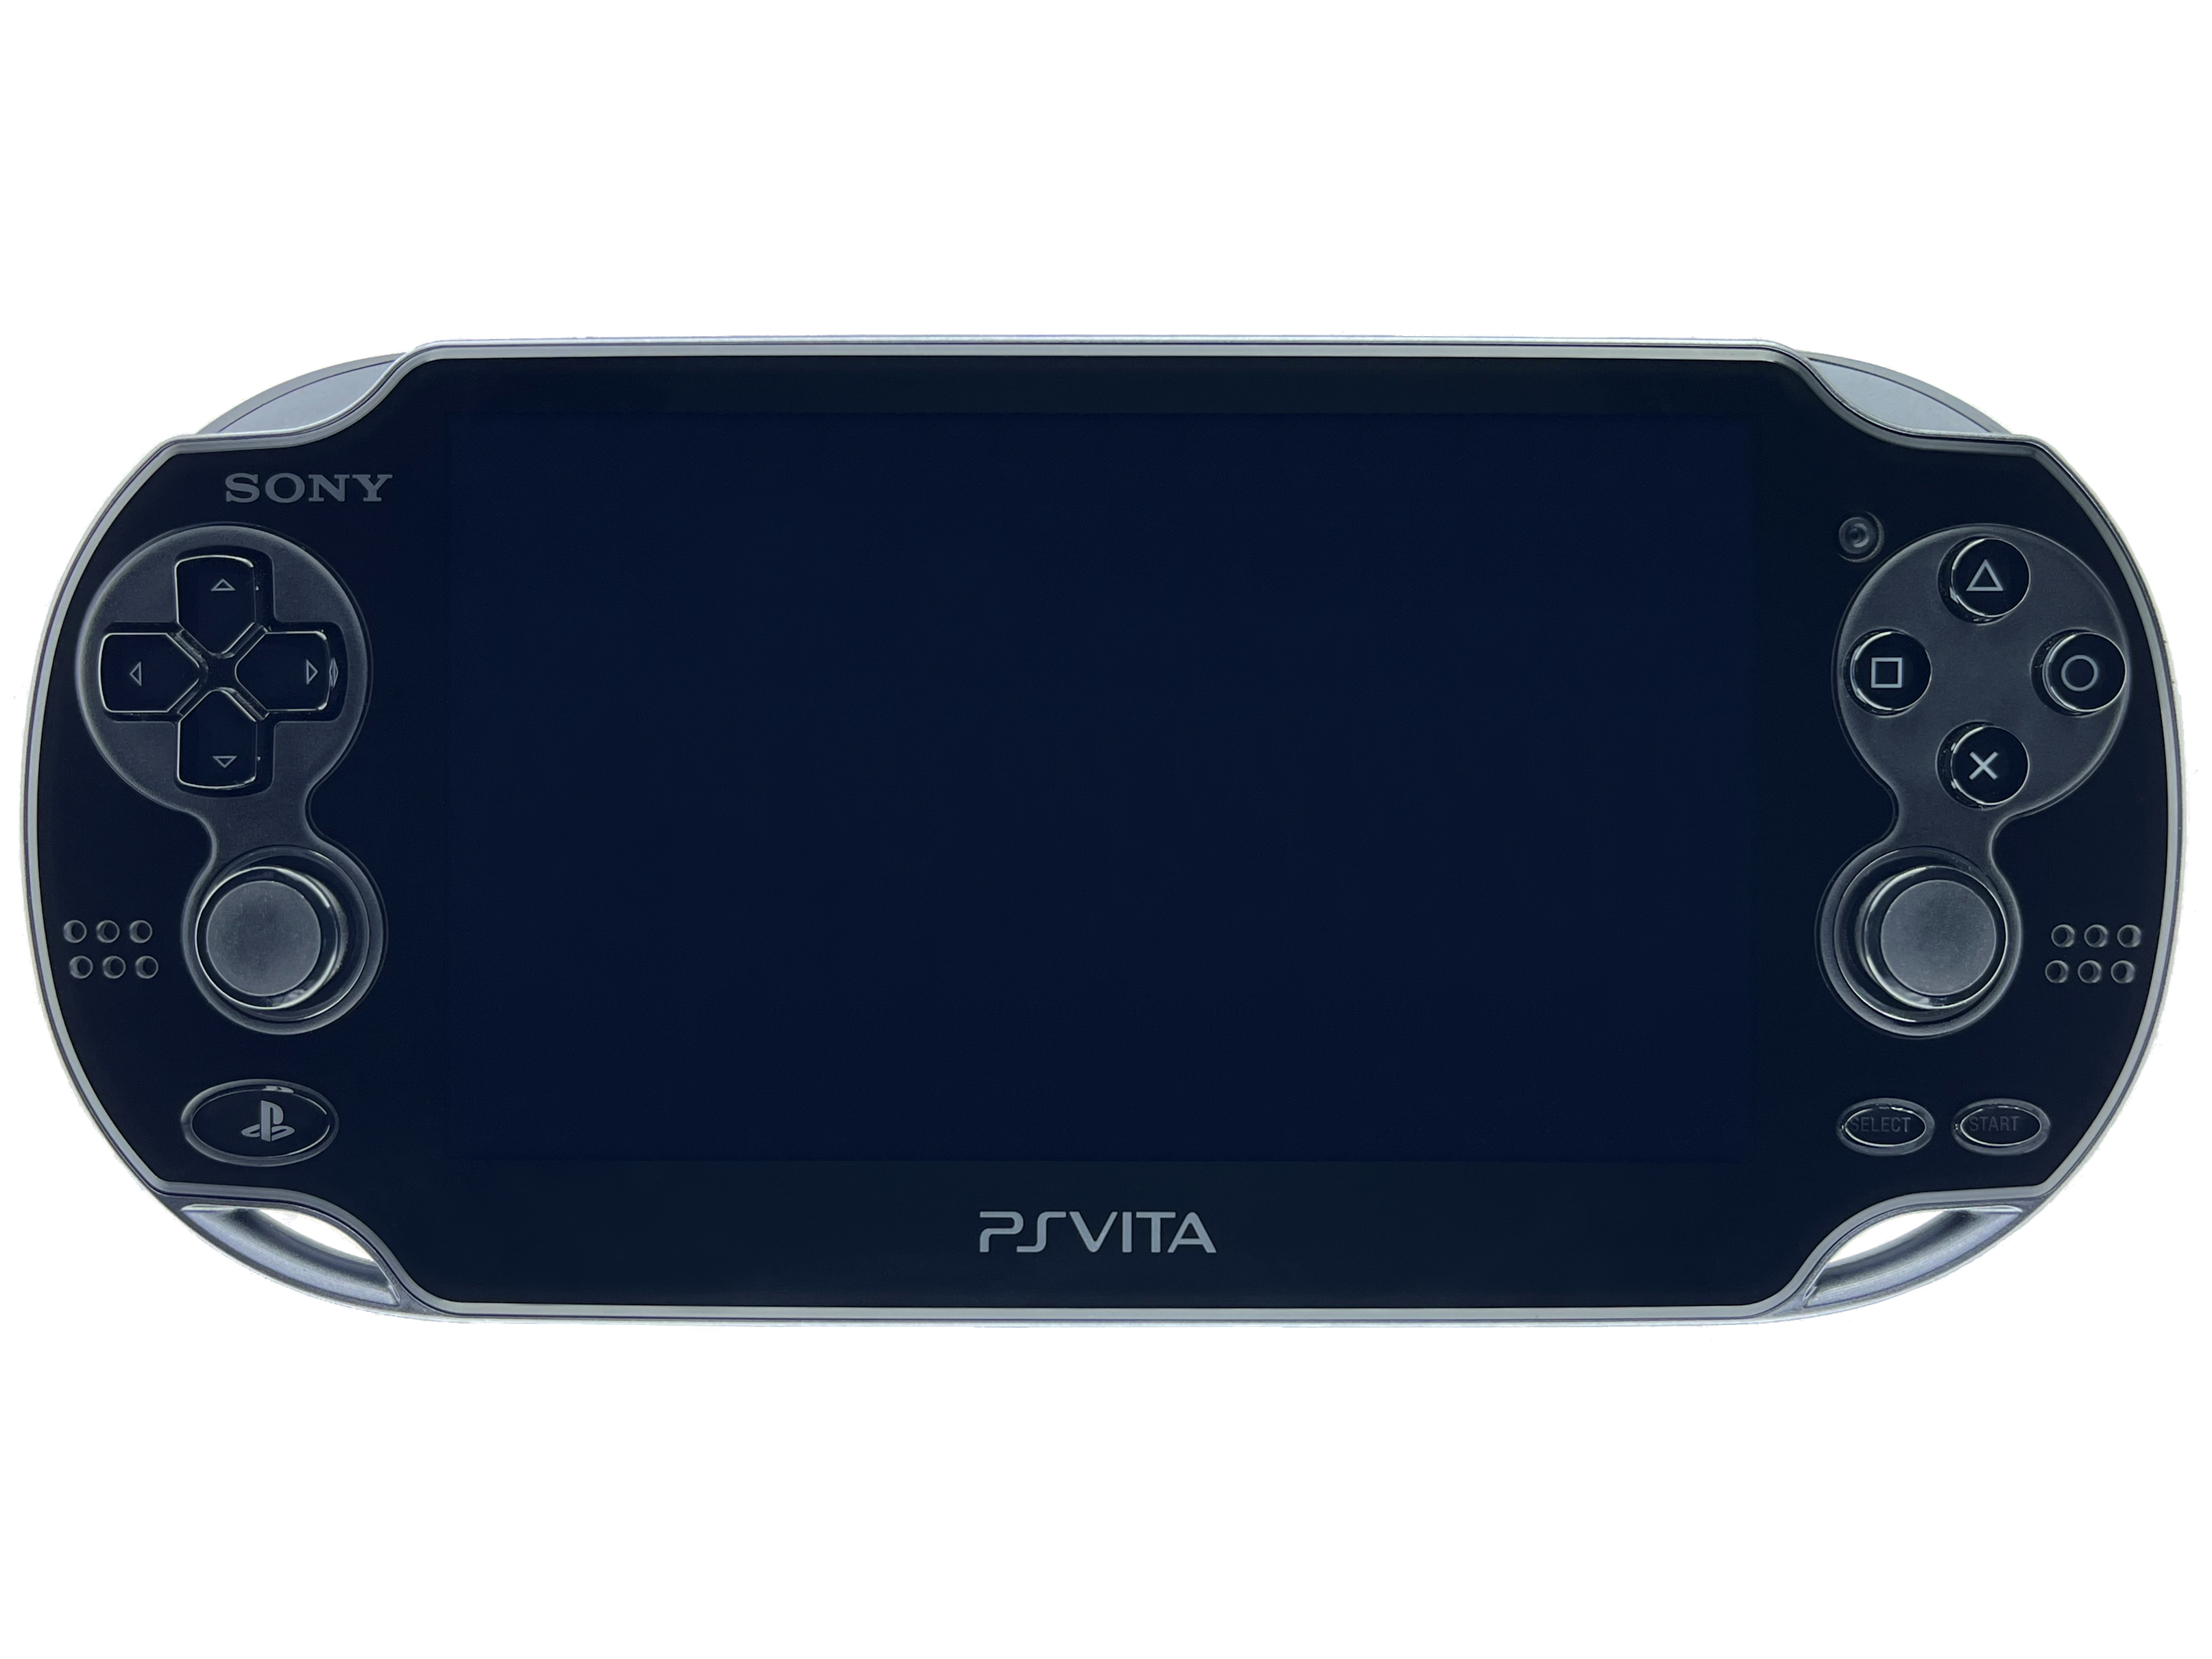  Sony PS Vita CEM-3000NP1 Prototype Console